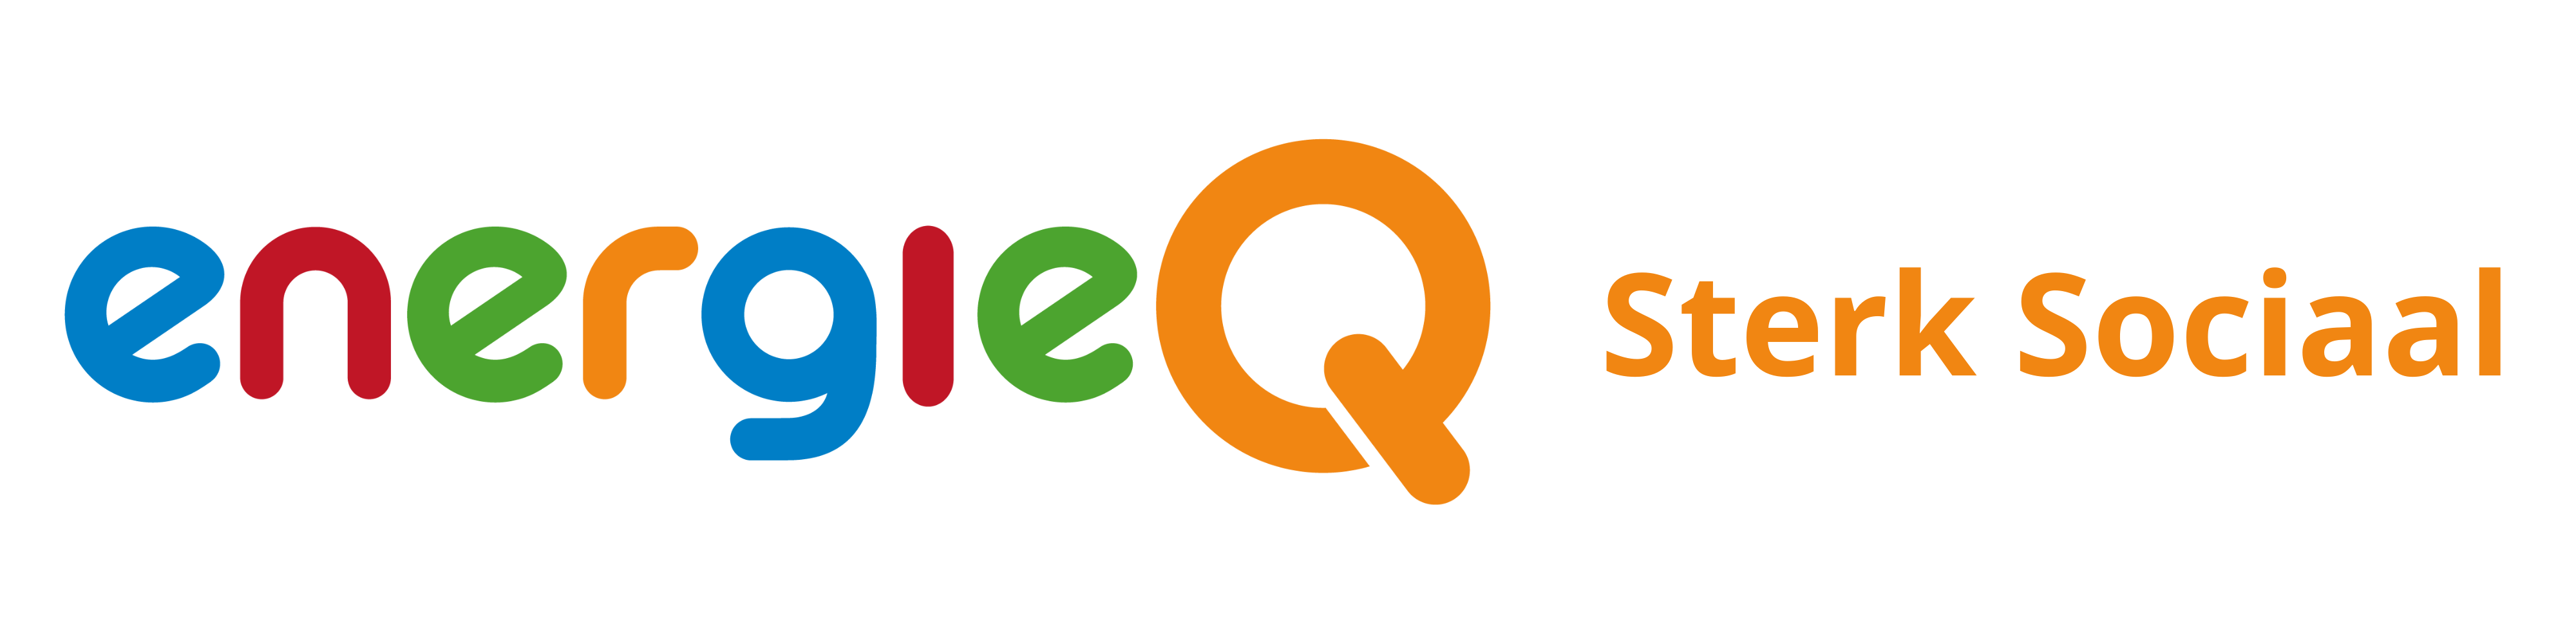 energieQ logo